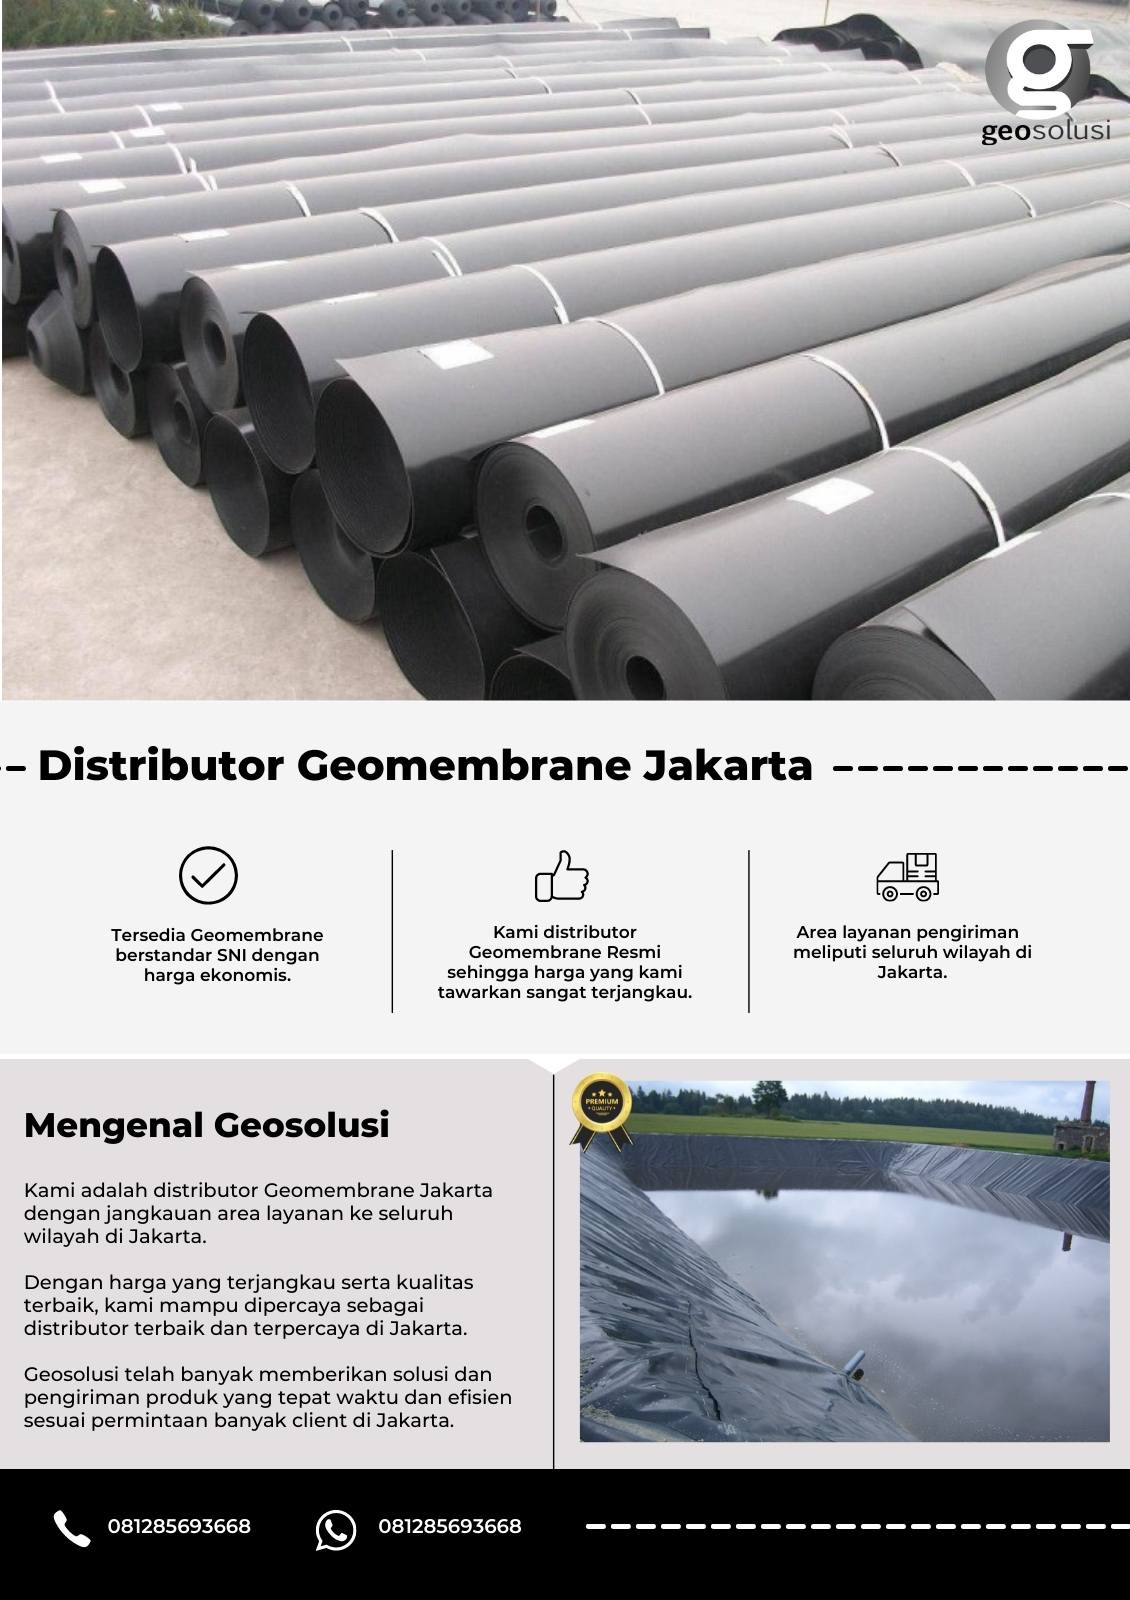 Distributor Geomembrane Jakarta